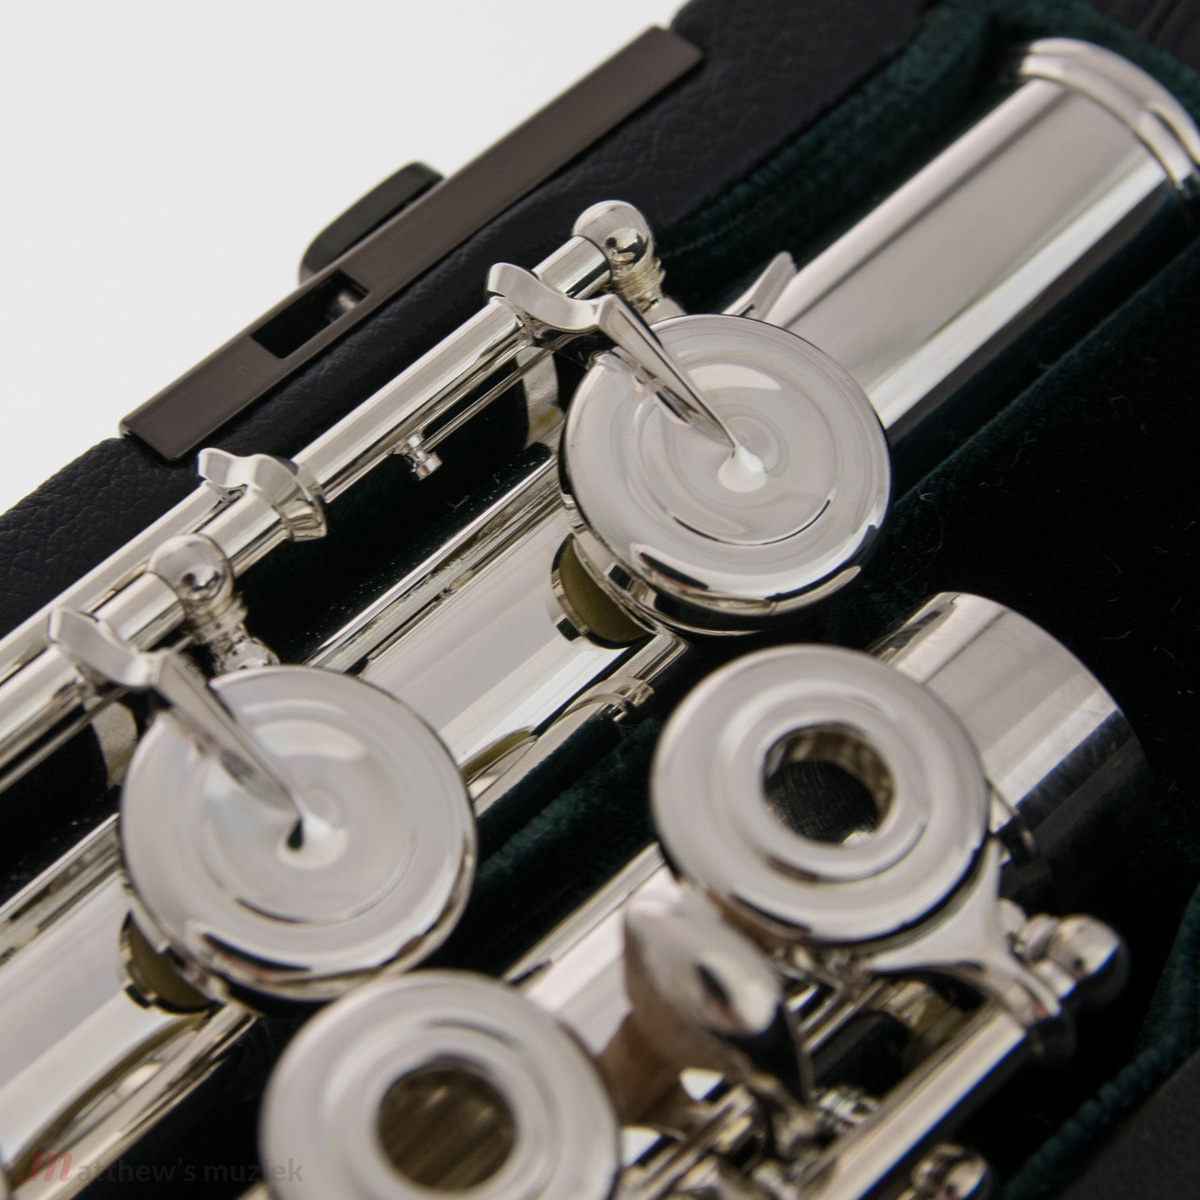 Altus Flute - 907 BE